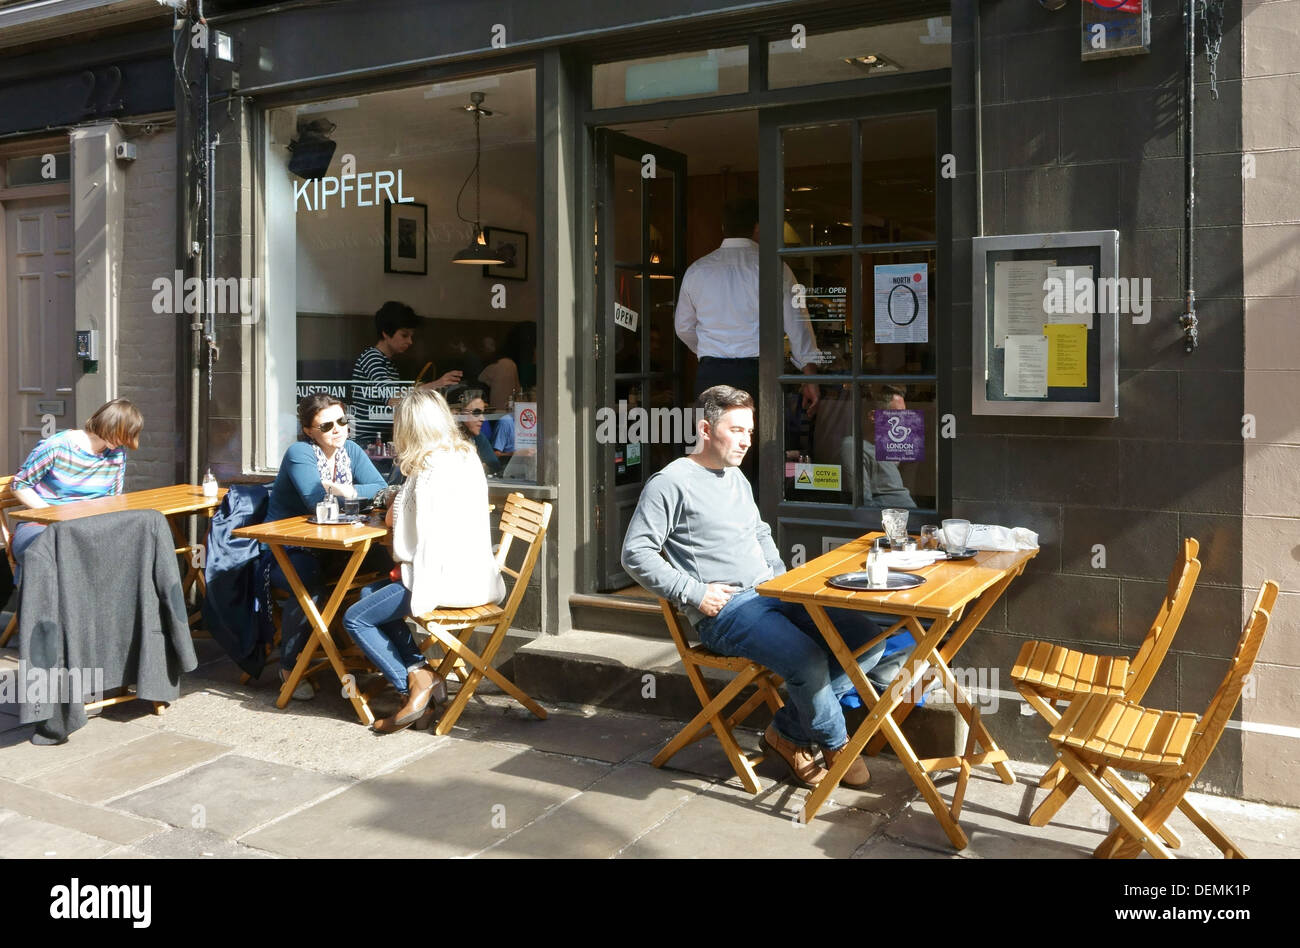 Kipferl Viennese coffee shop and restaurant, Islington, London Stock Photo